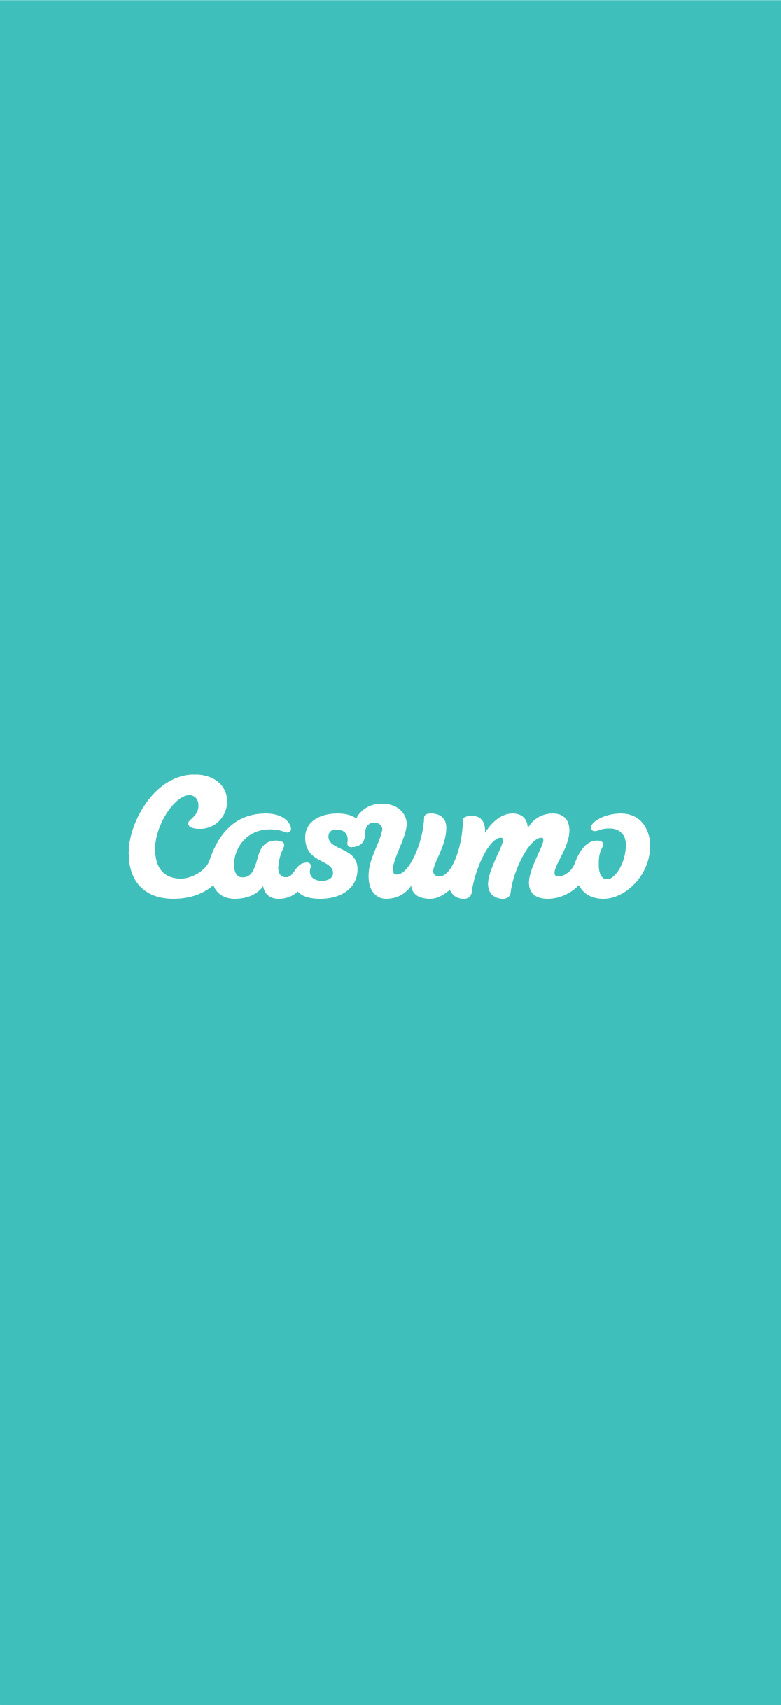 HiCasumo_App-02.jpg